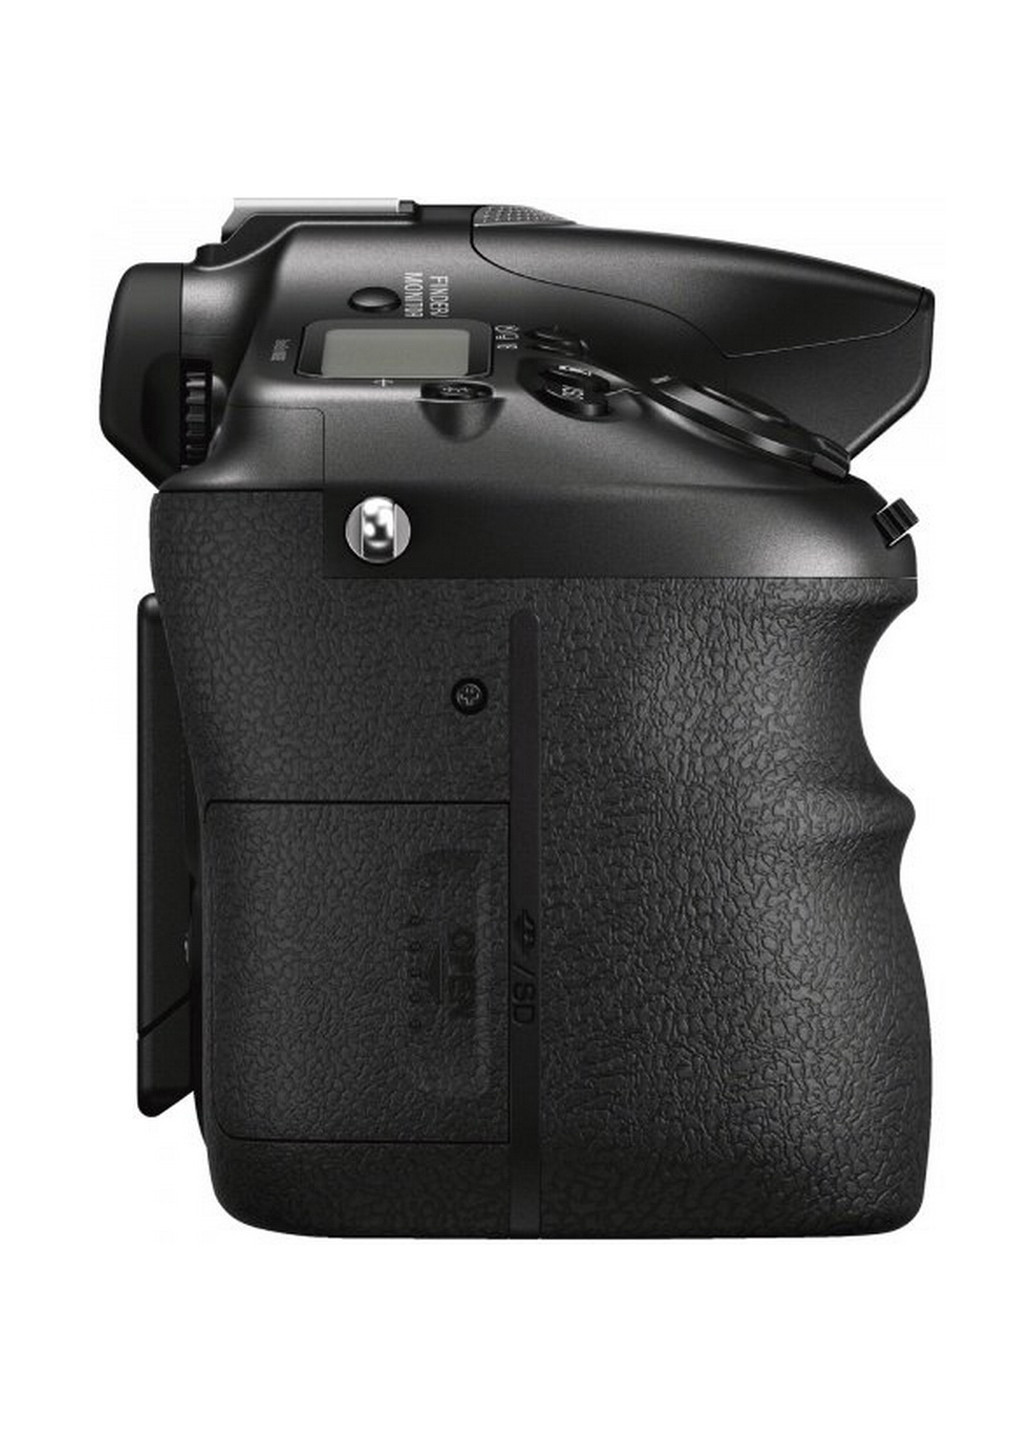 Дзеркальна фотокамера Alpha A68 kit 18-55mm Sony Alpha A68 kit 18-55mm Black чорна